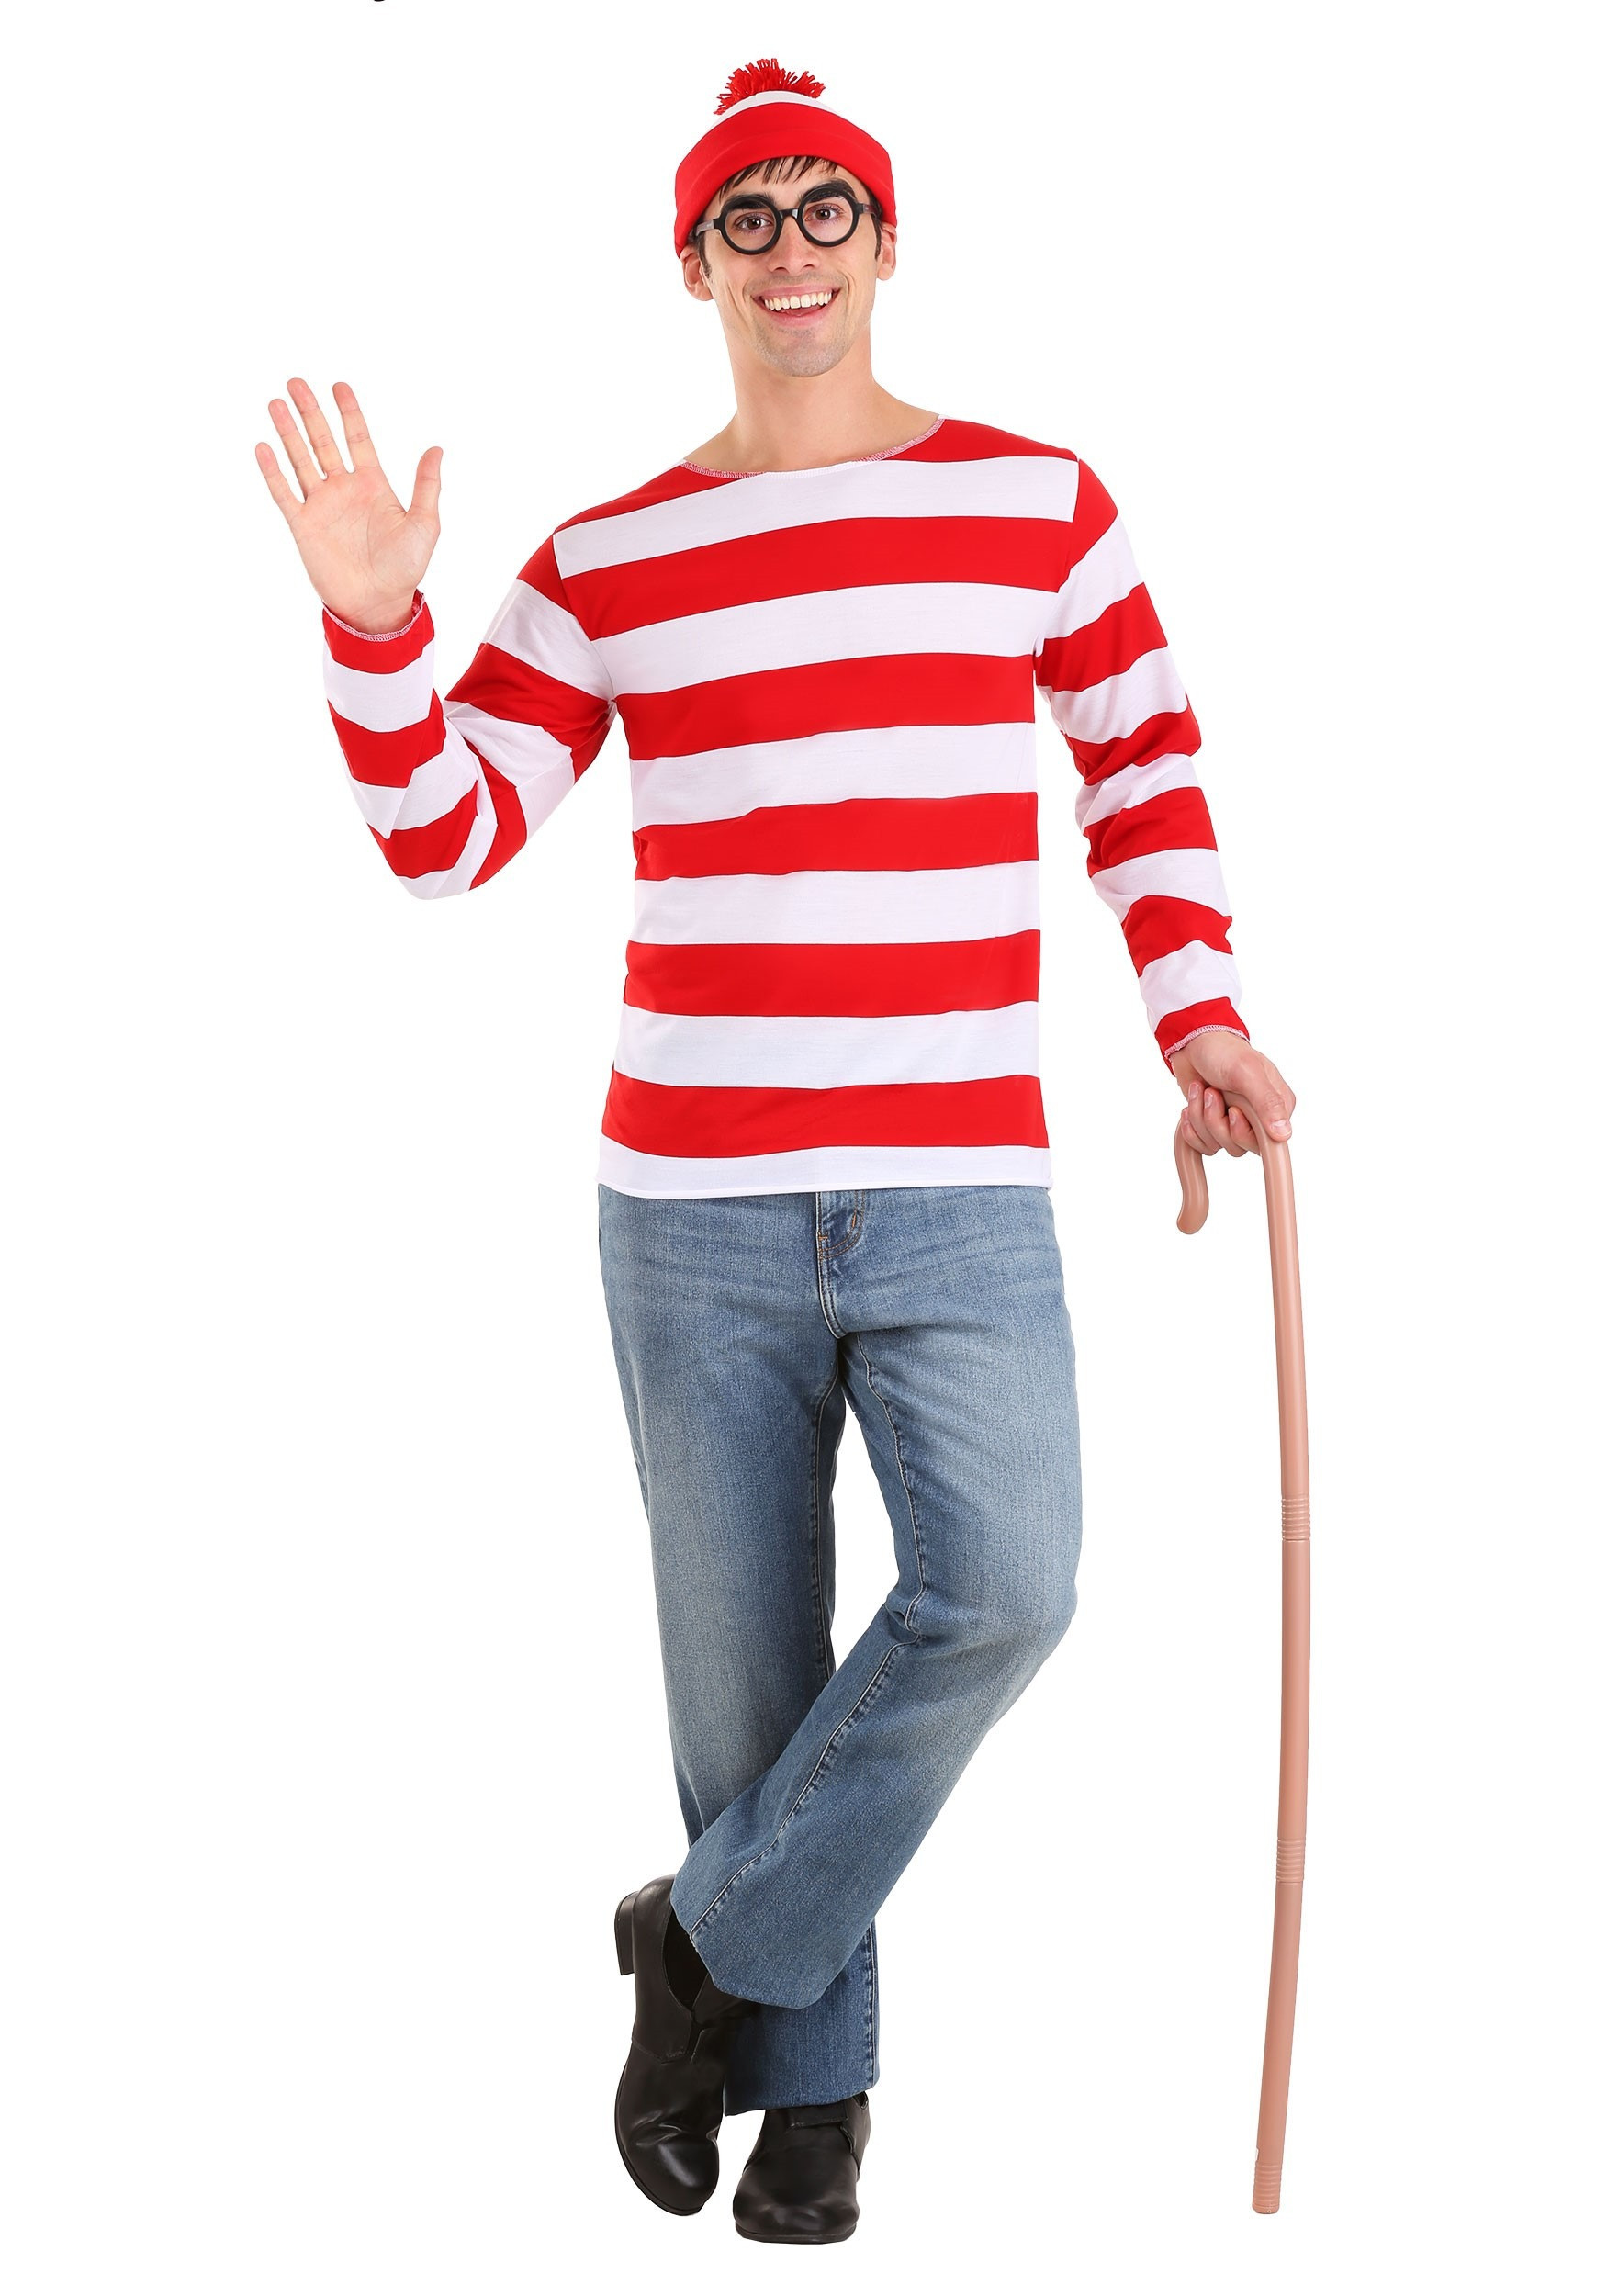 DIY Waldo Costume
 Where’s Waldo Costume – Exclusive Sizes Available